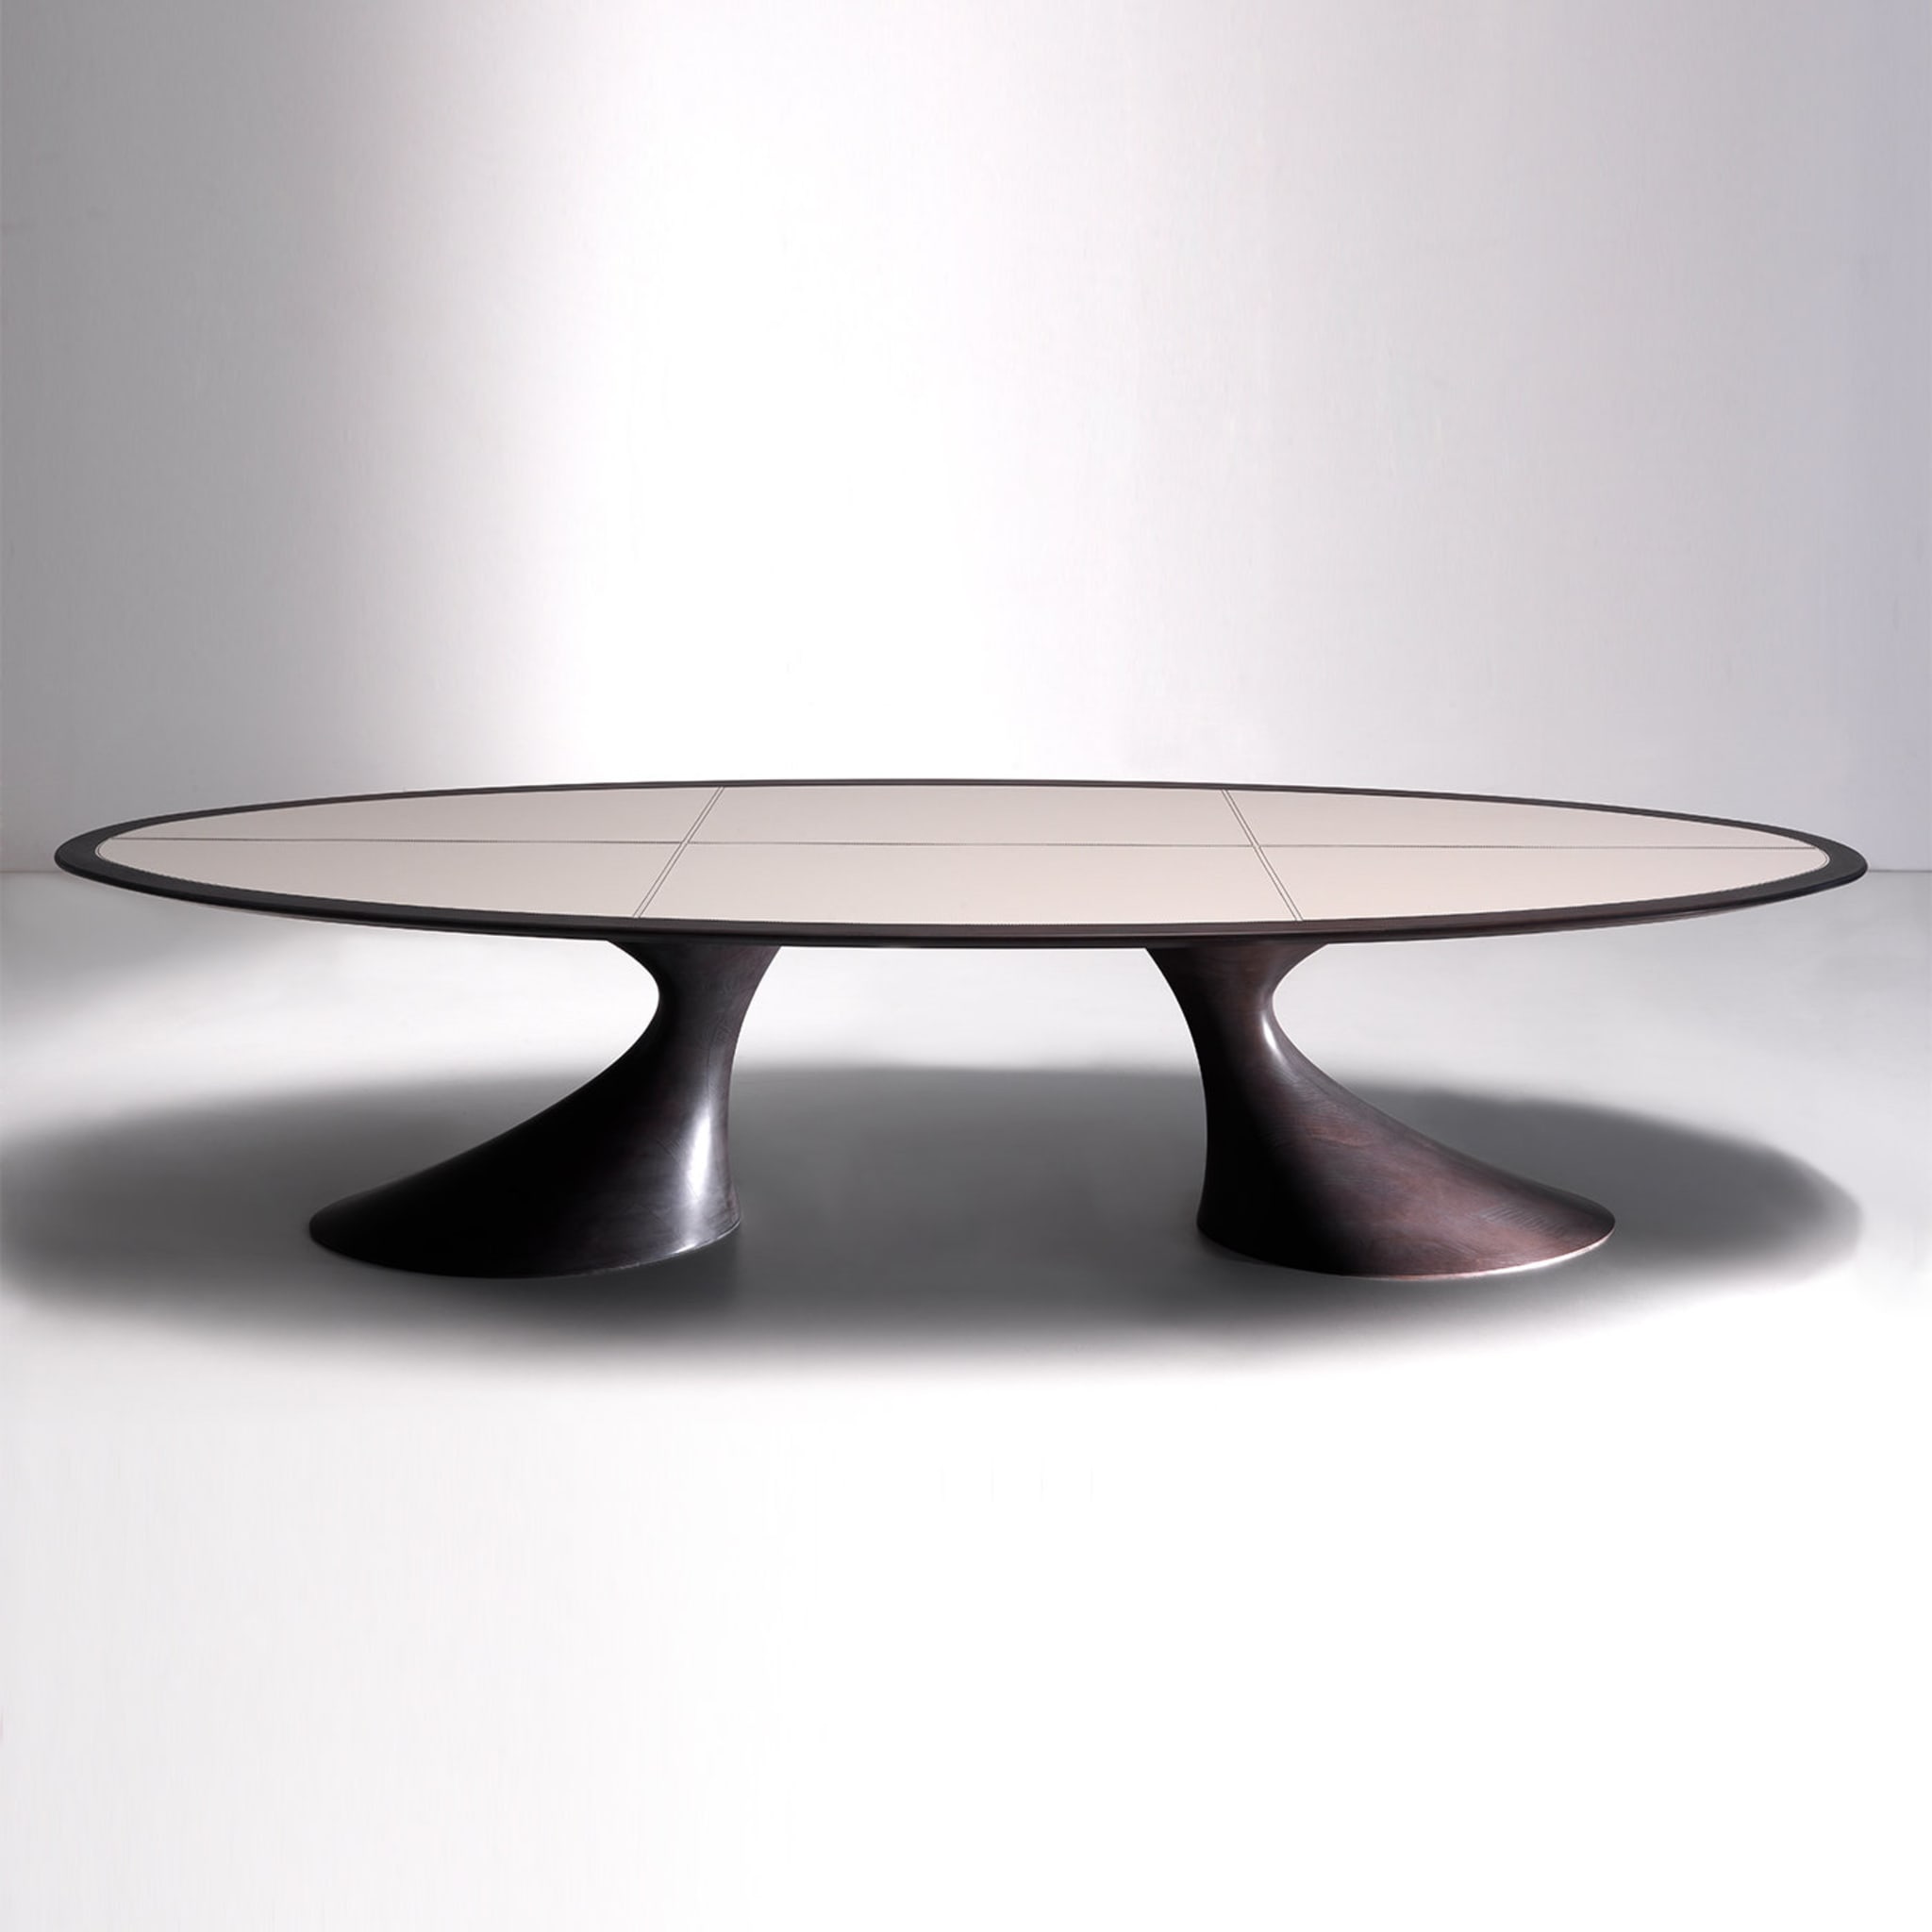 Bend Dining Table by Giovanna Azzarello - Alternative view 1